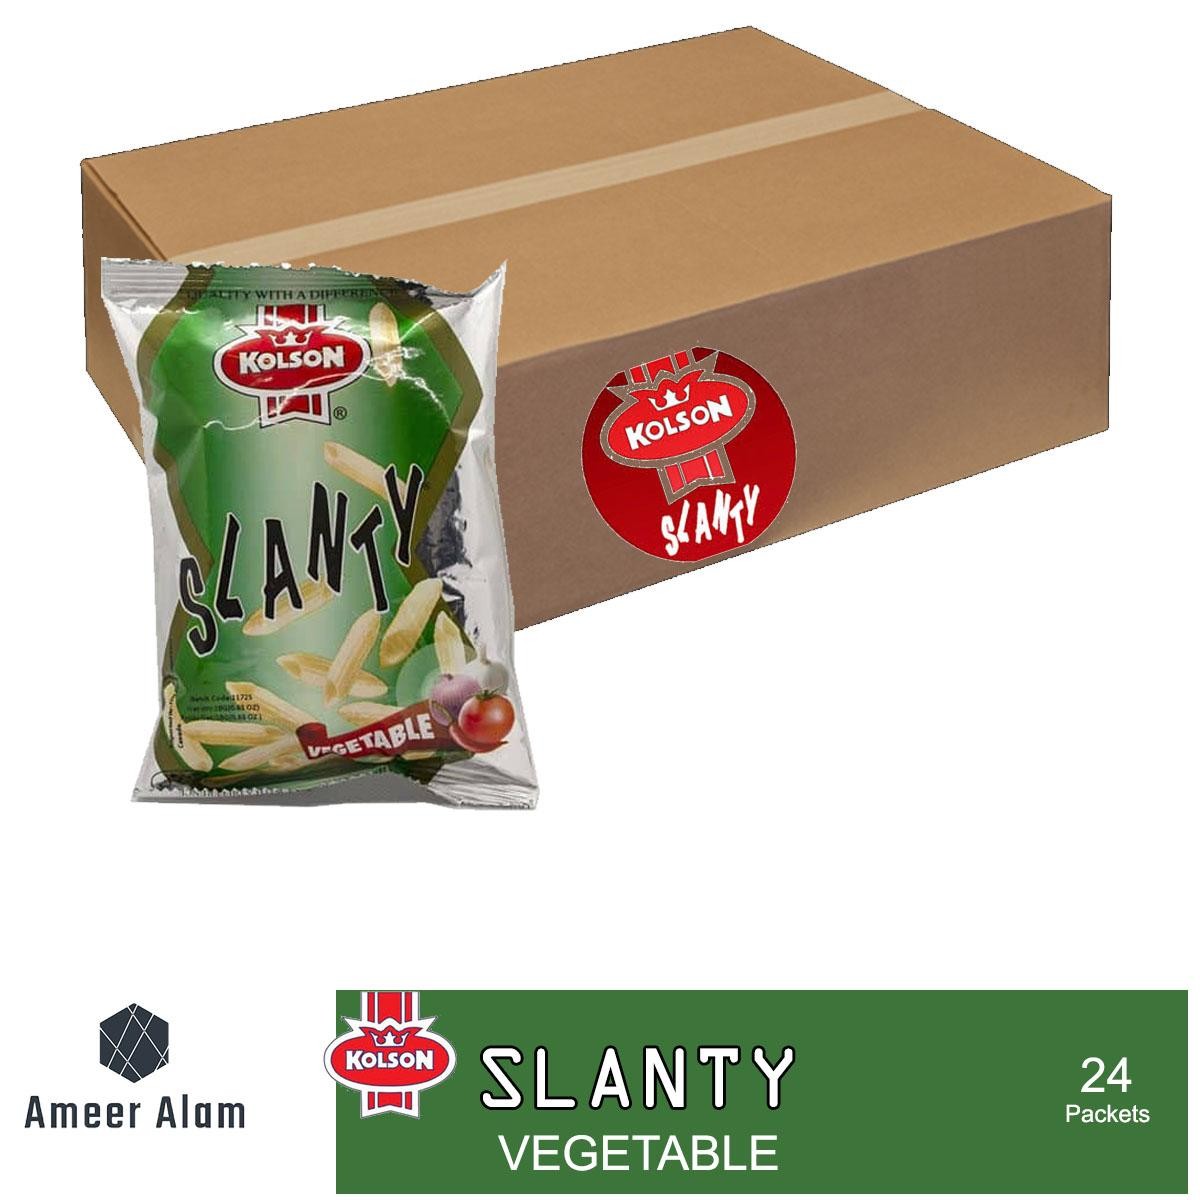 Kolson Slanty Vegetable - 15g - 24 Packets